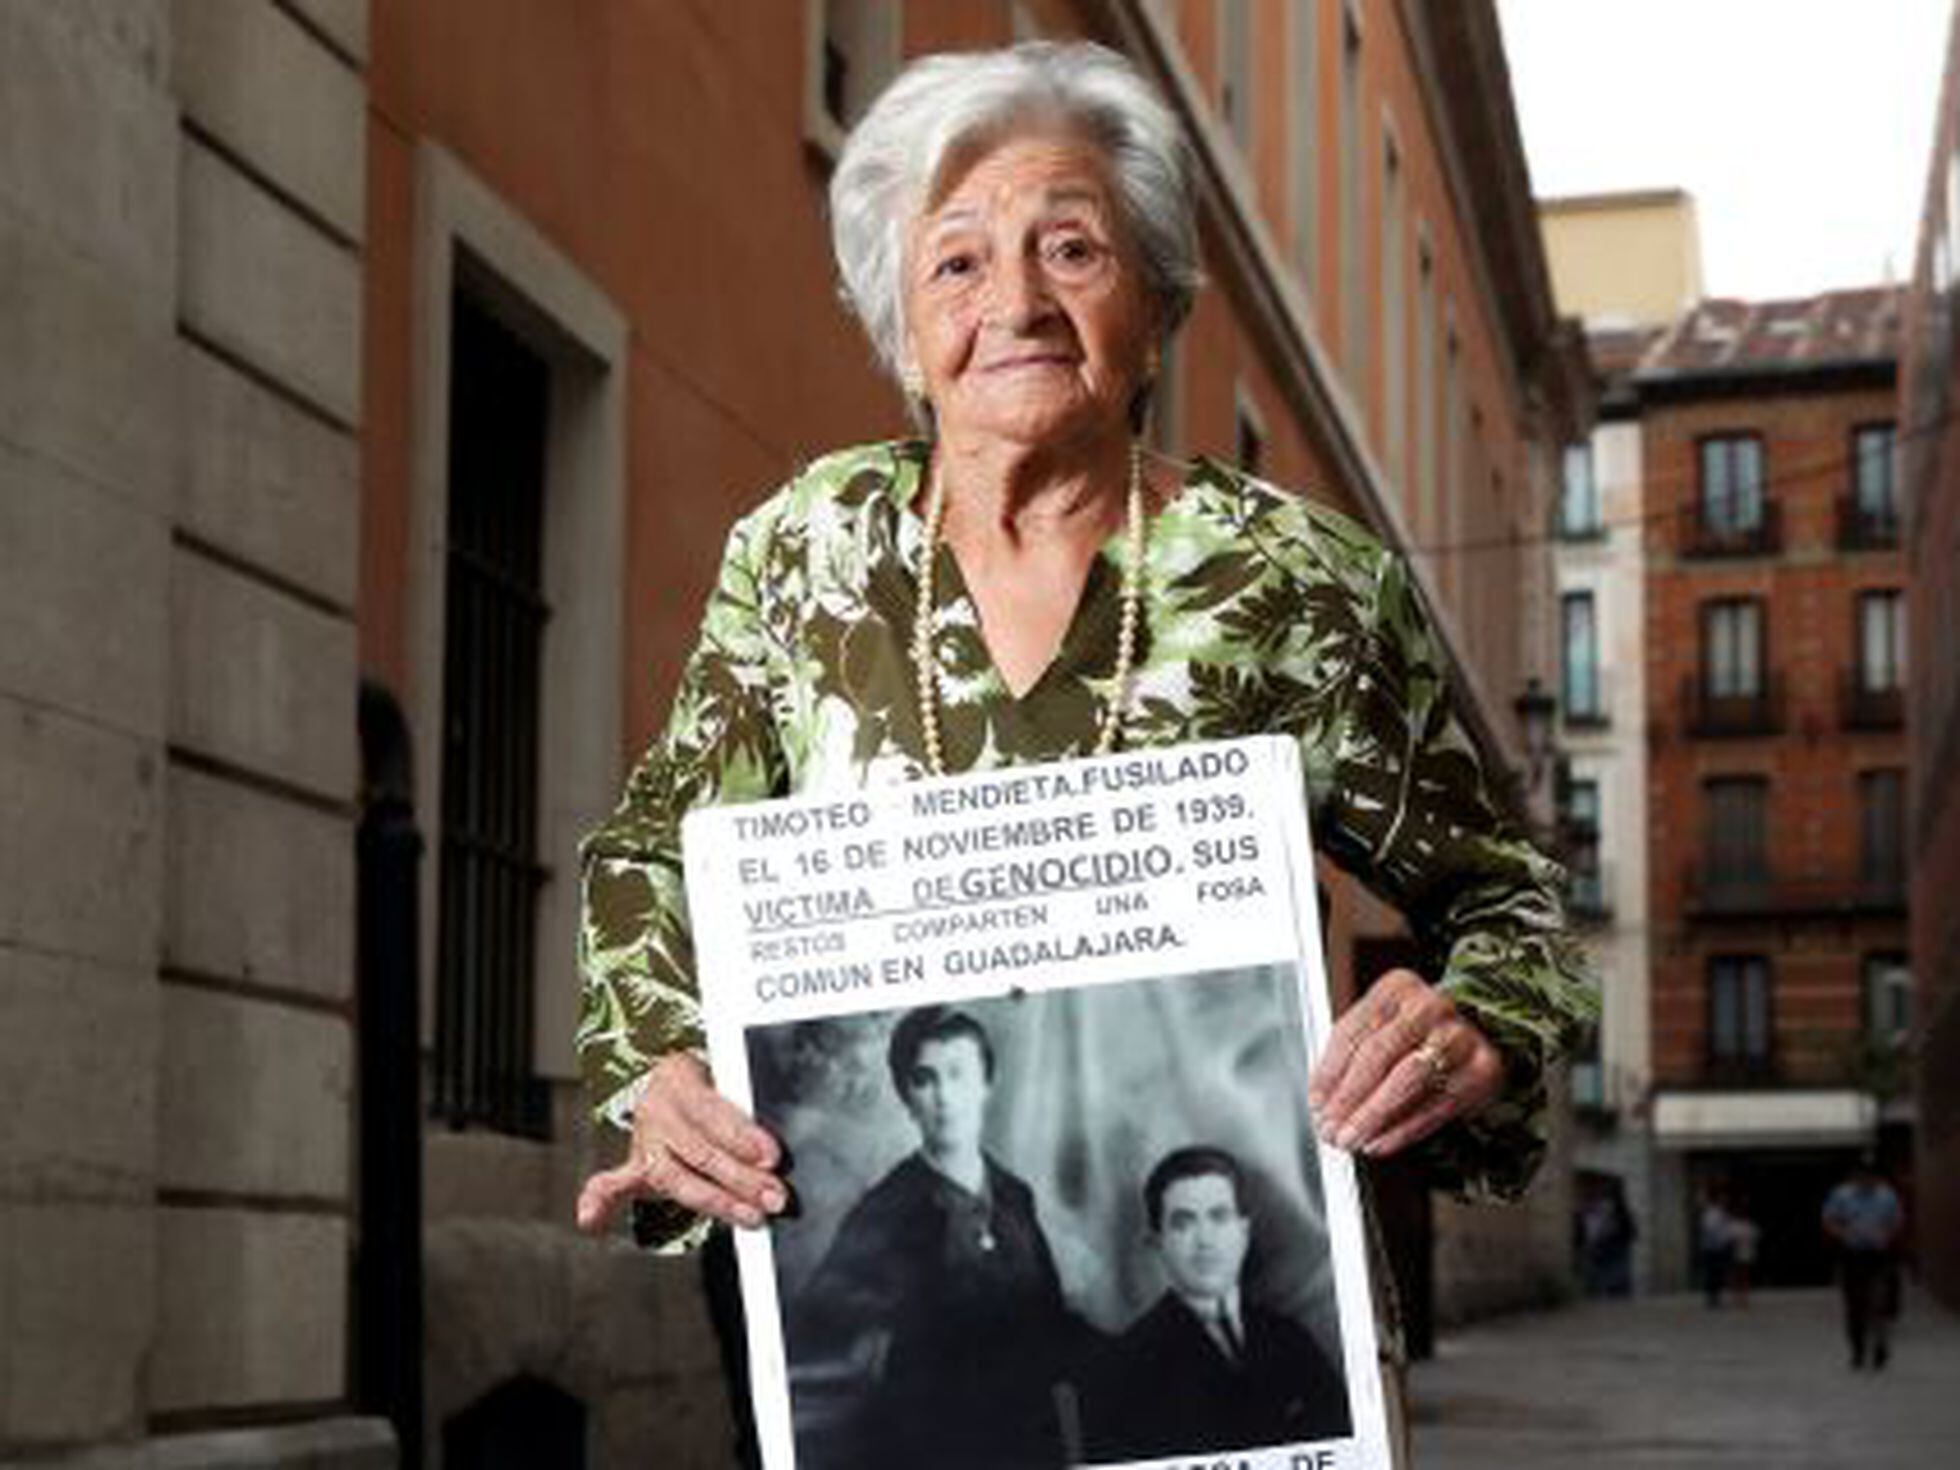 Spain stonewalls on Franco-era abuses, Spain